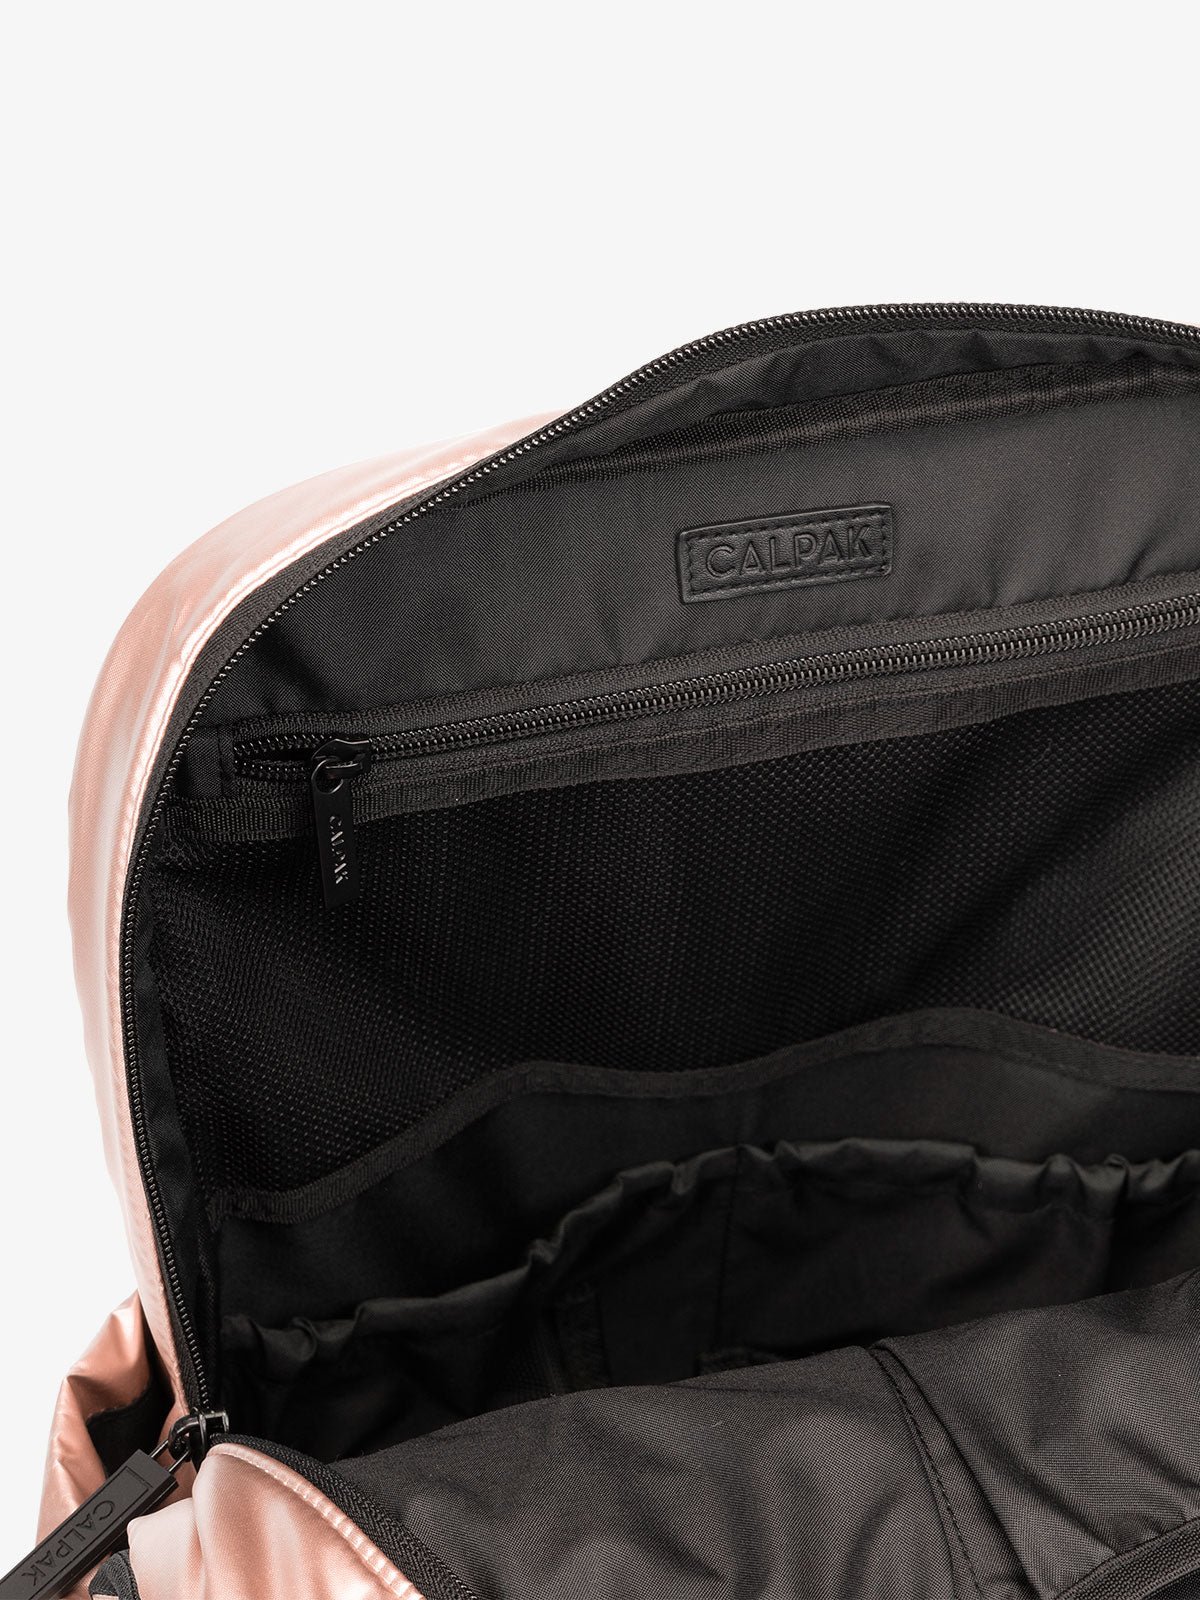 CALPAK Luka Laptop puffy Backpack for work with mesh pocket interior in metallic pink